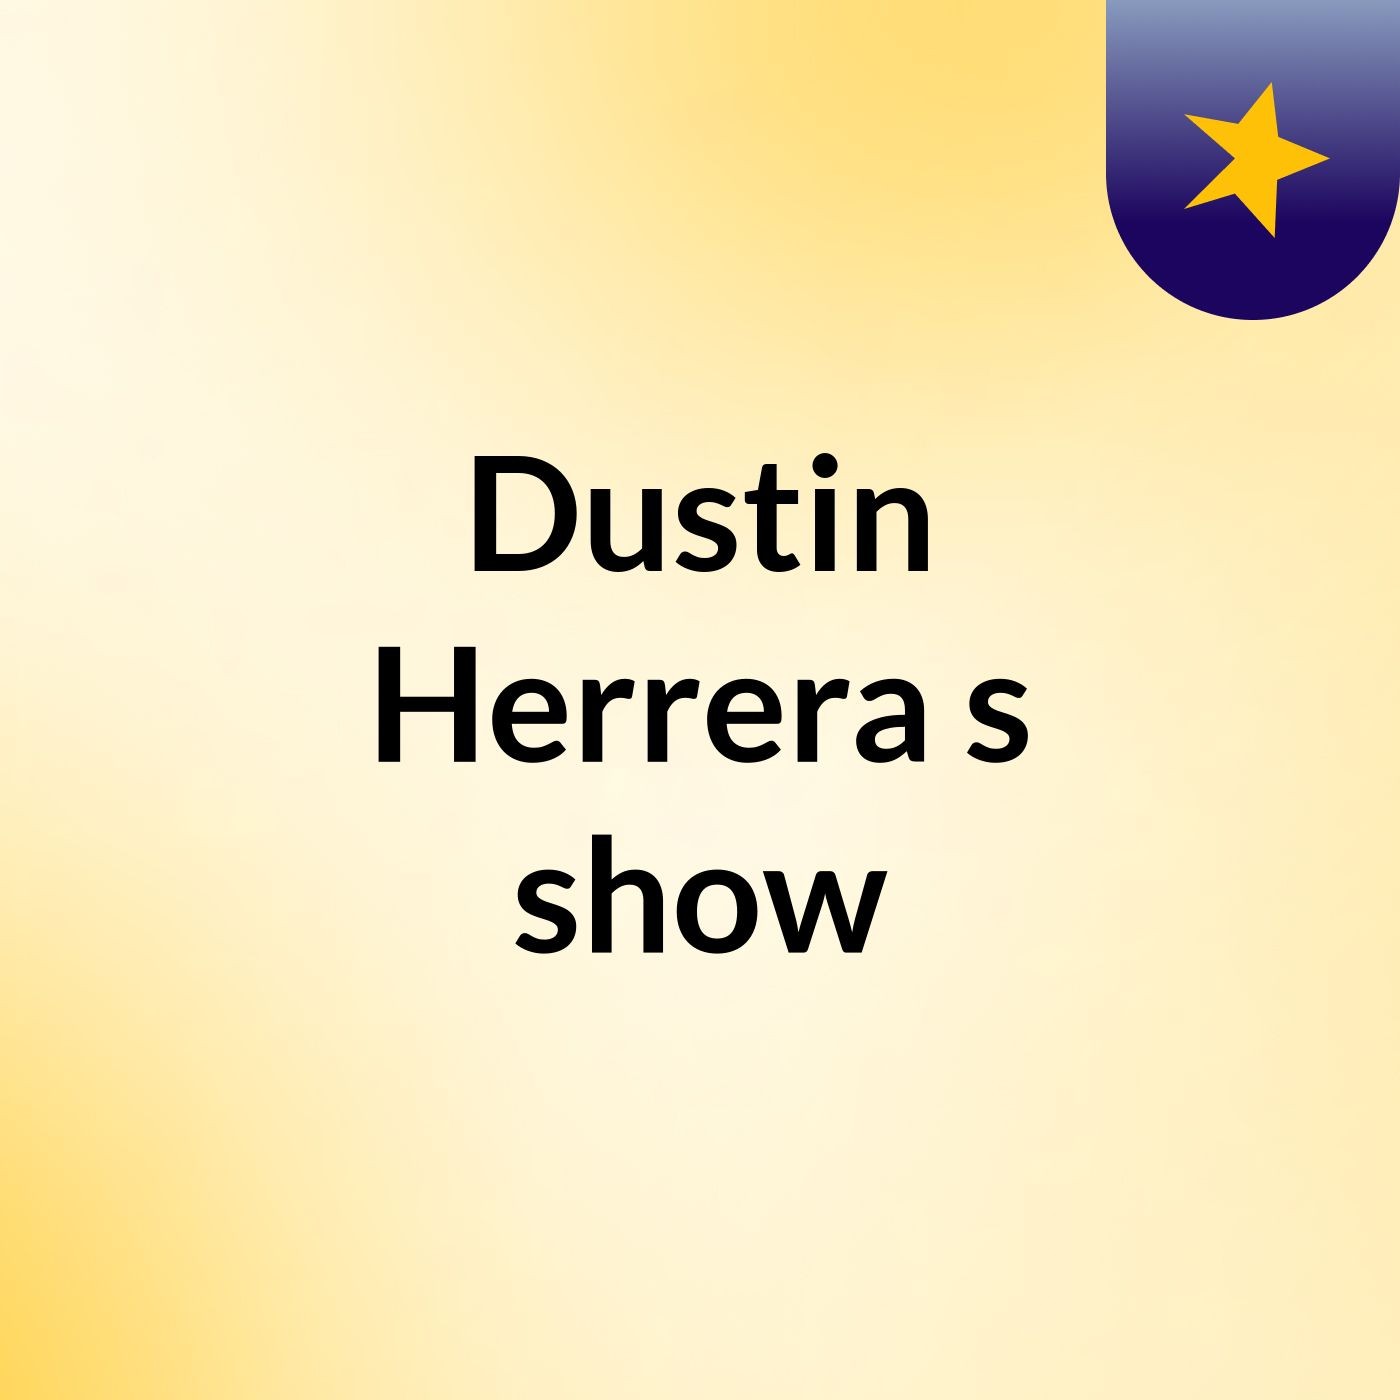 Dustin Herrera's show